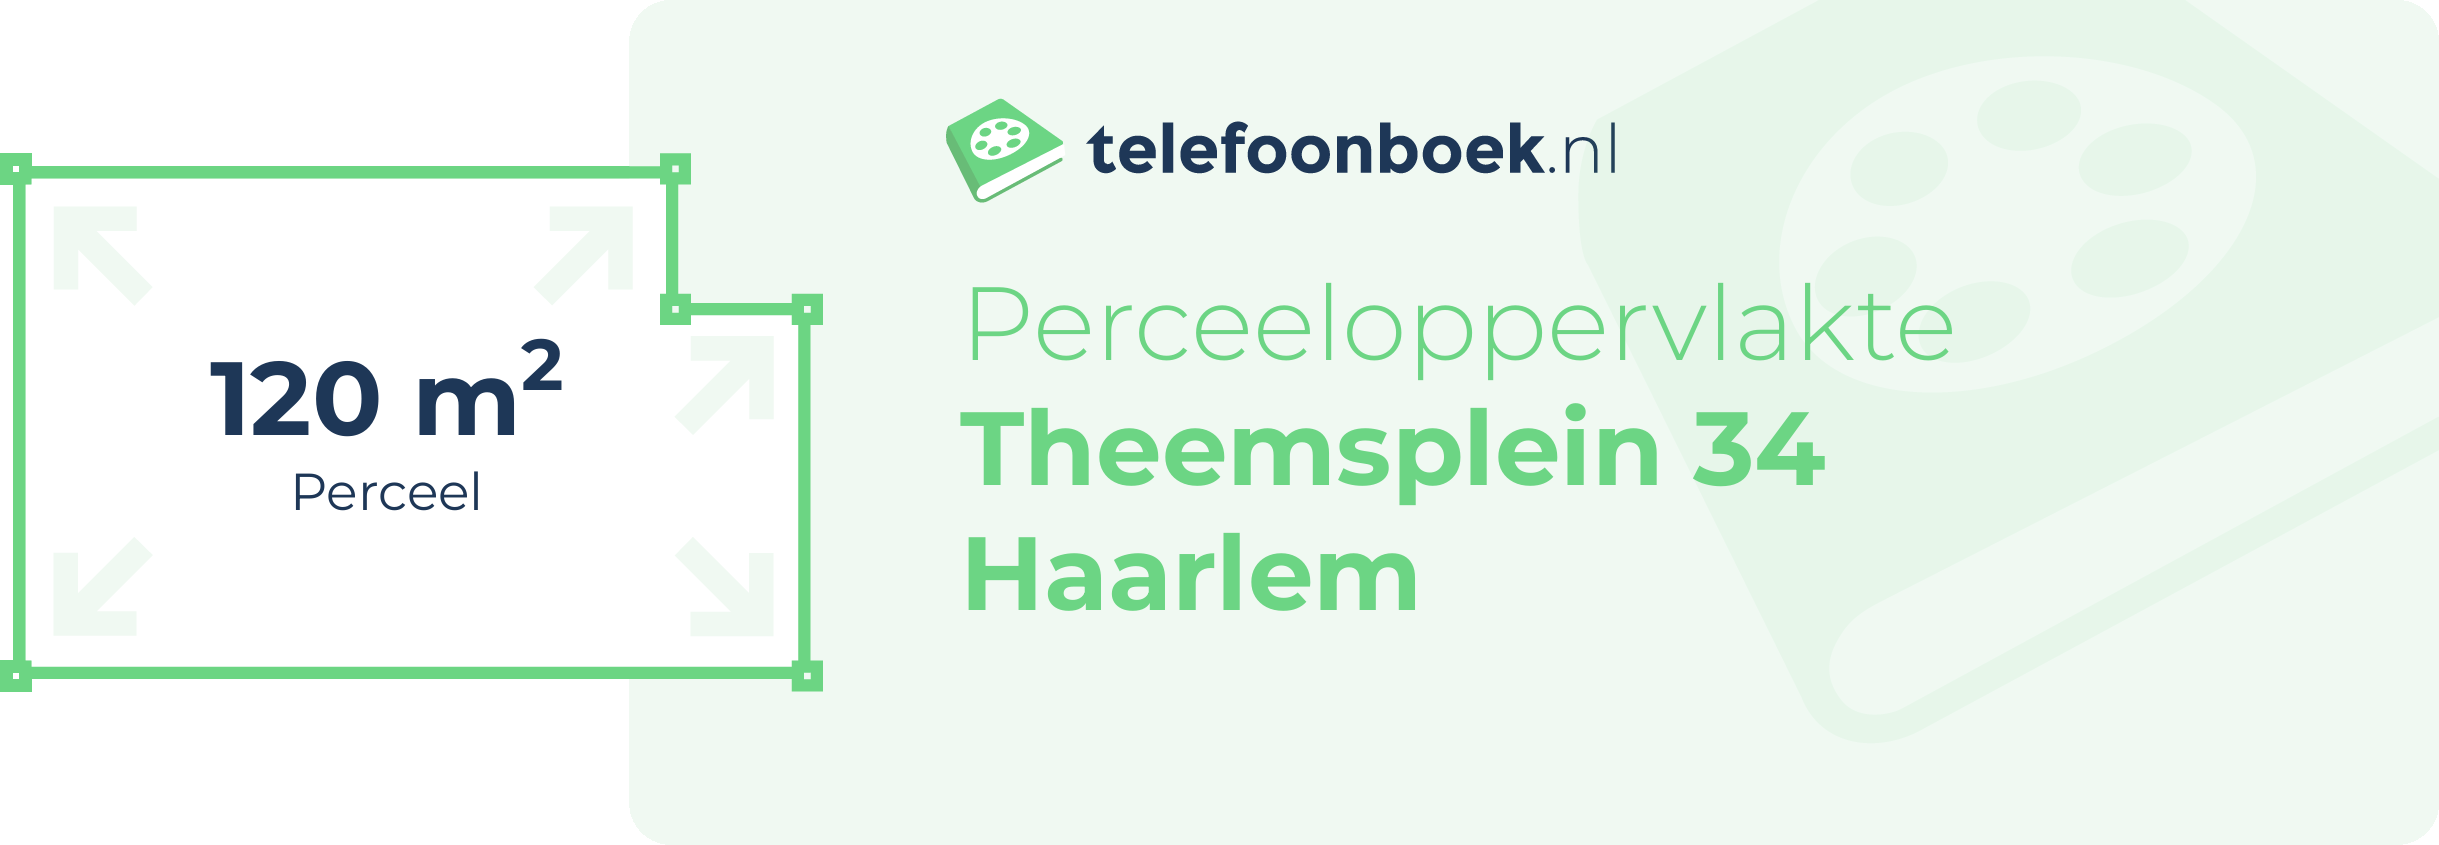 Perceeloppervlakte Theemsplein 34 Haarlem